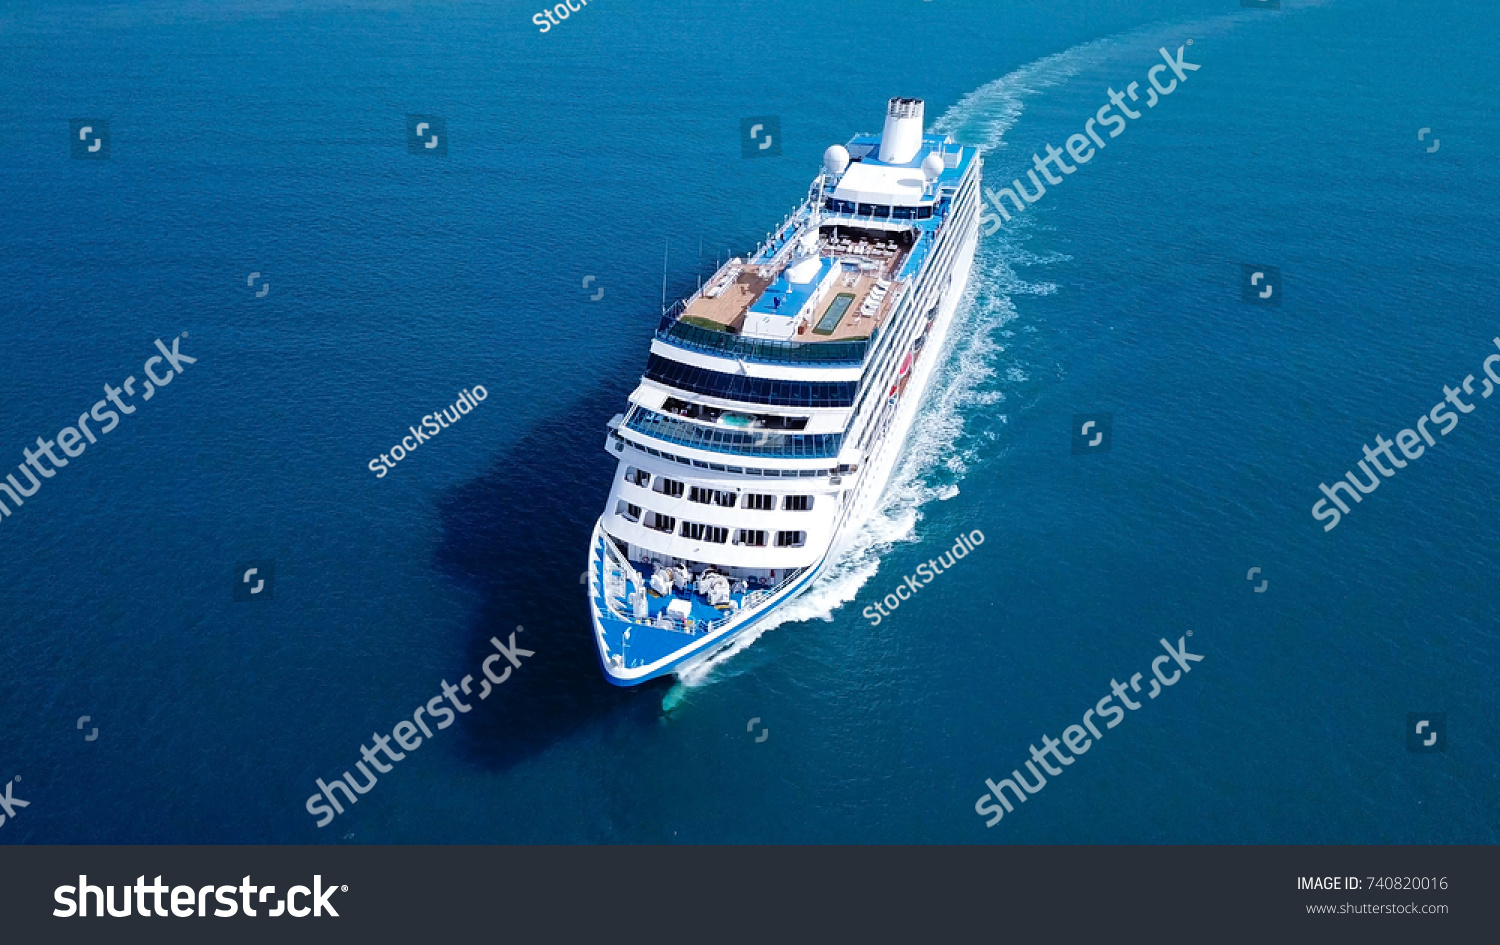 Large Cruise ship sailing across The Mediterranean sea - Aerial image #740820016